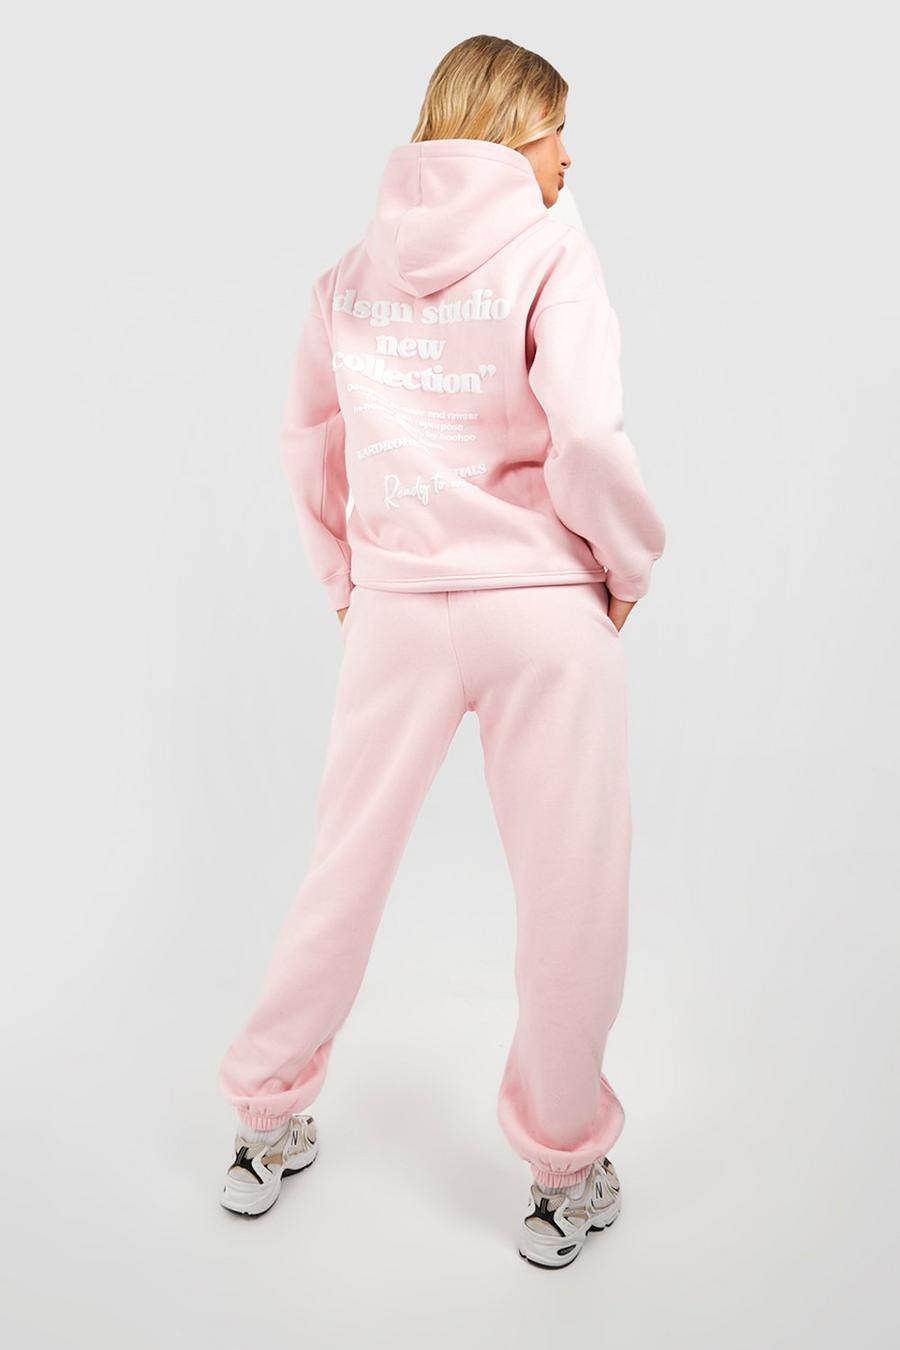 Trainingsanzug mit Dsgn Studio Slogan und Kapuze, Light pink